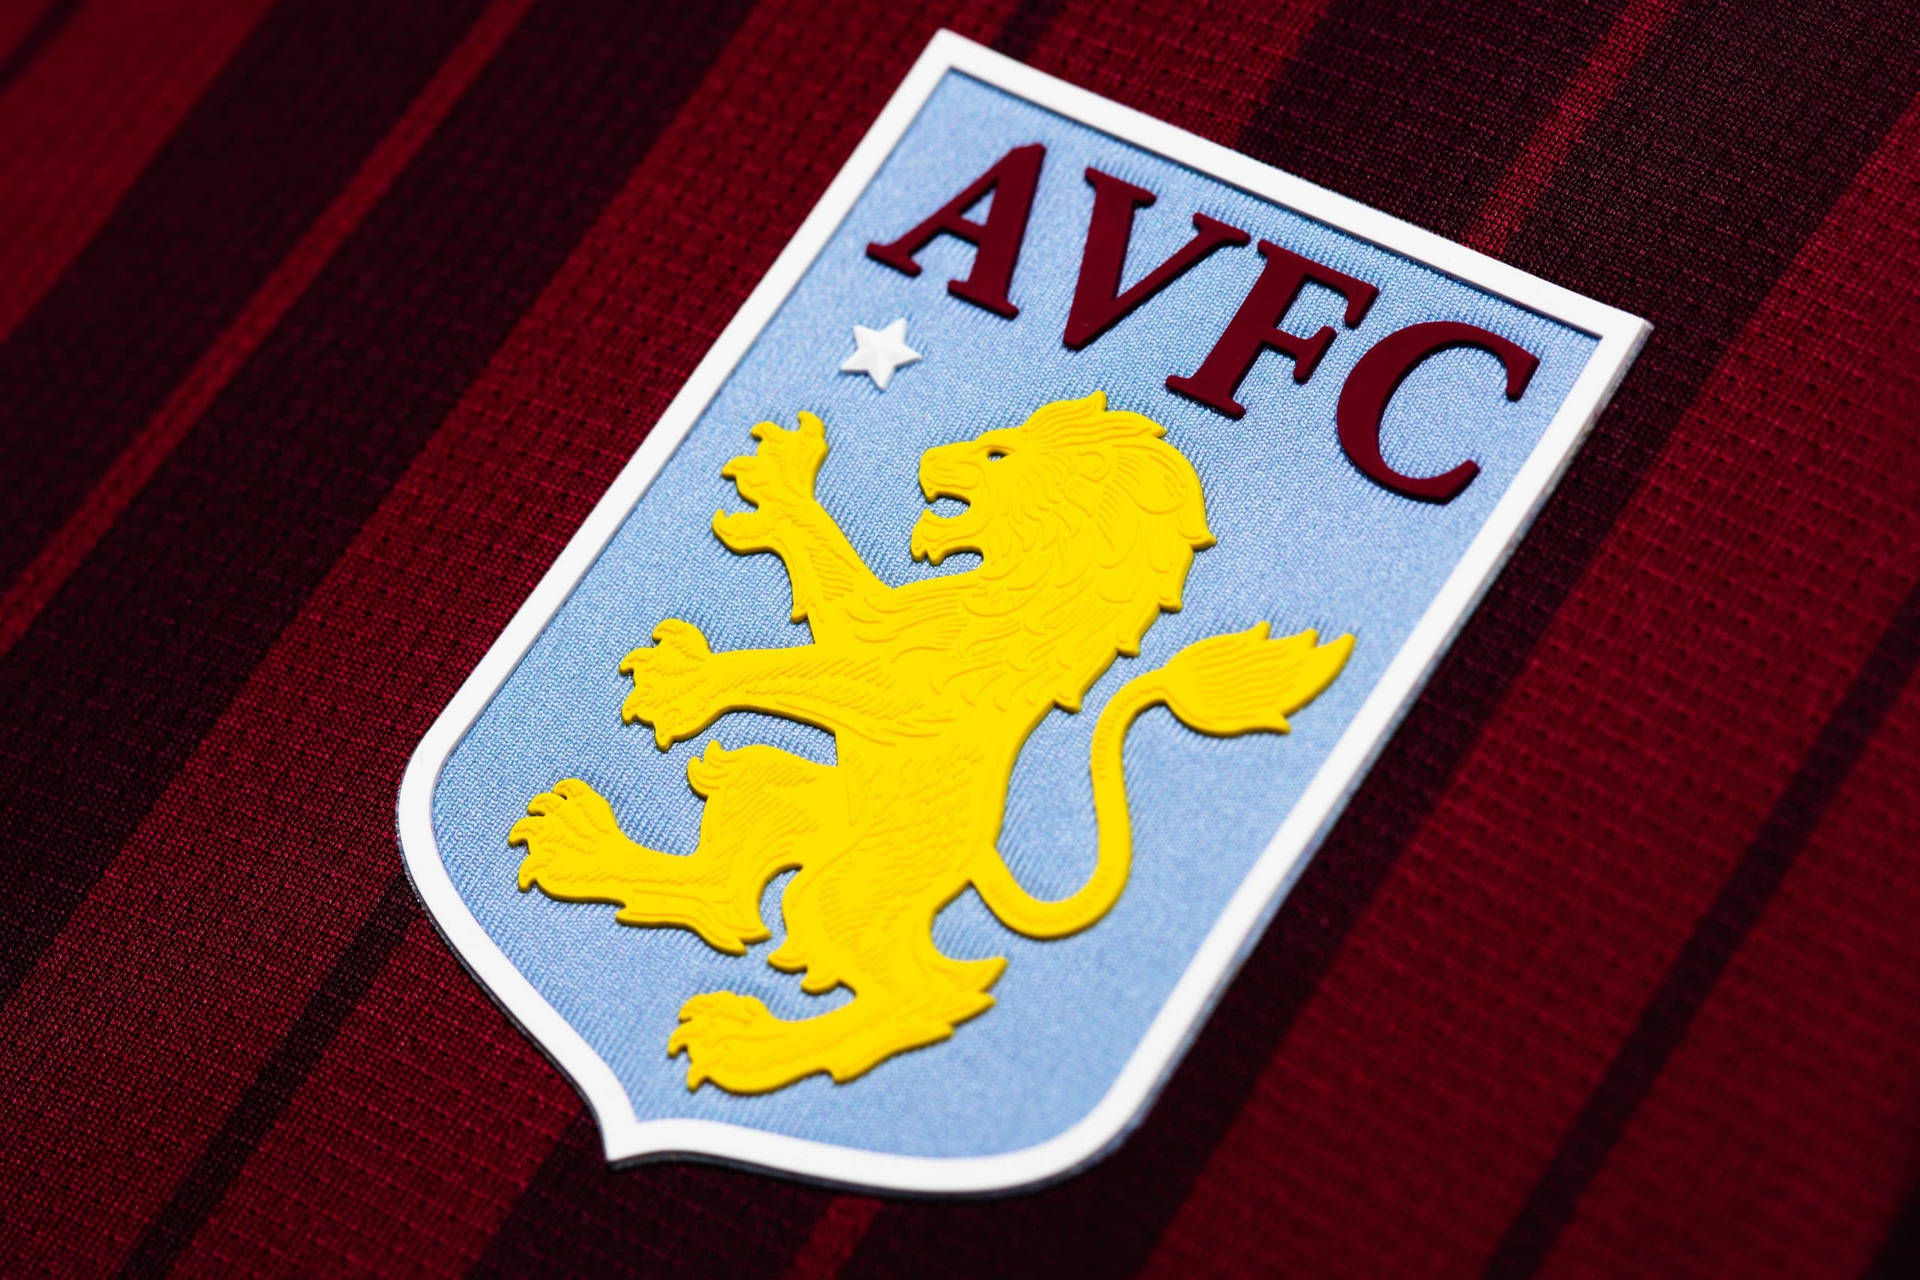 Aston Villa Official Team Kit And Logo